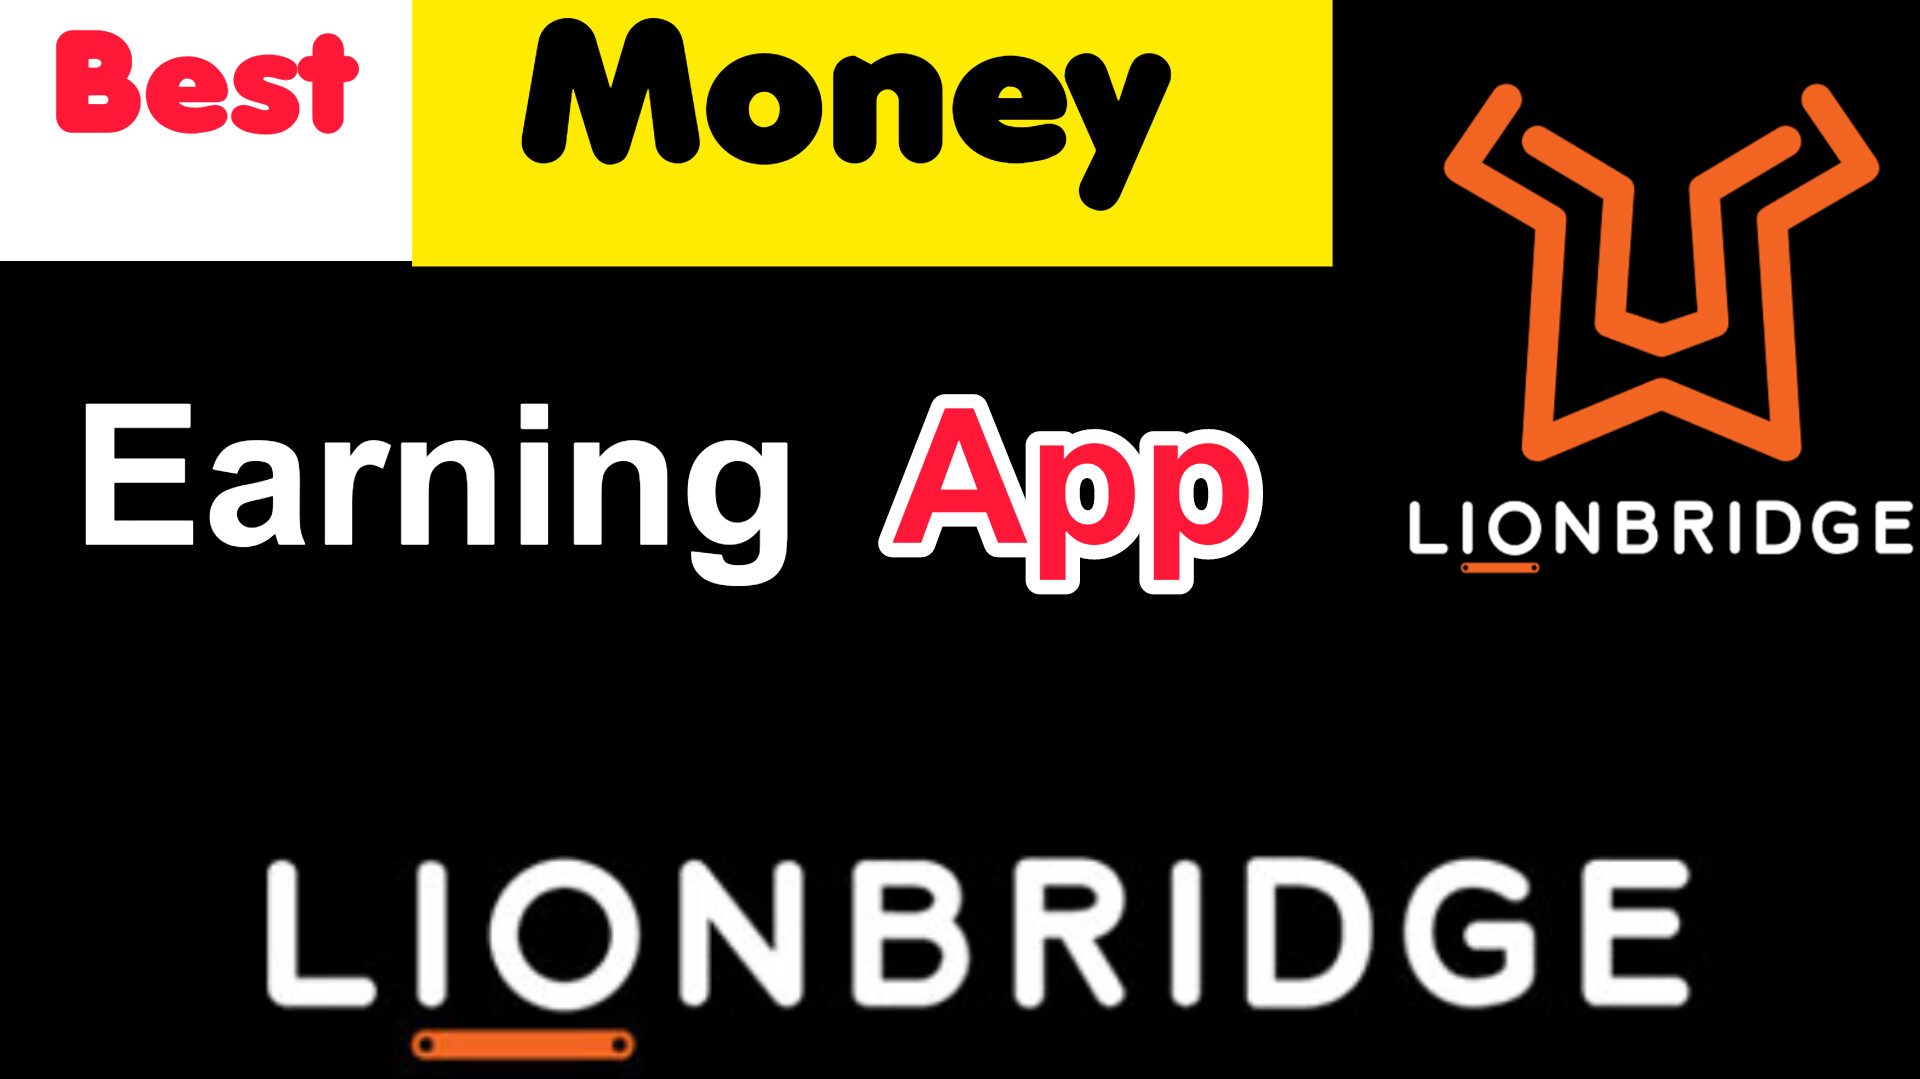 Lionbridge App | New Earning App Today | Online Earning App